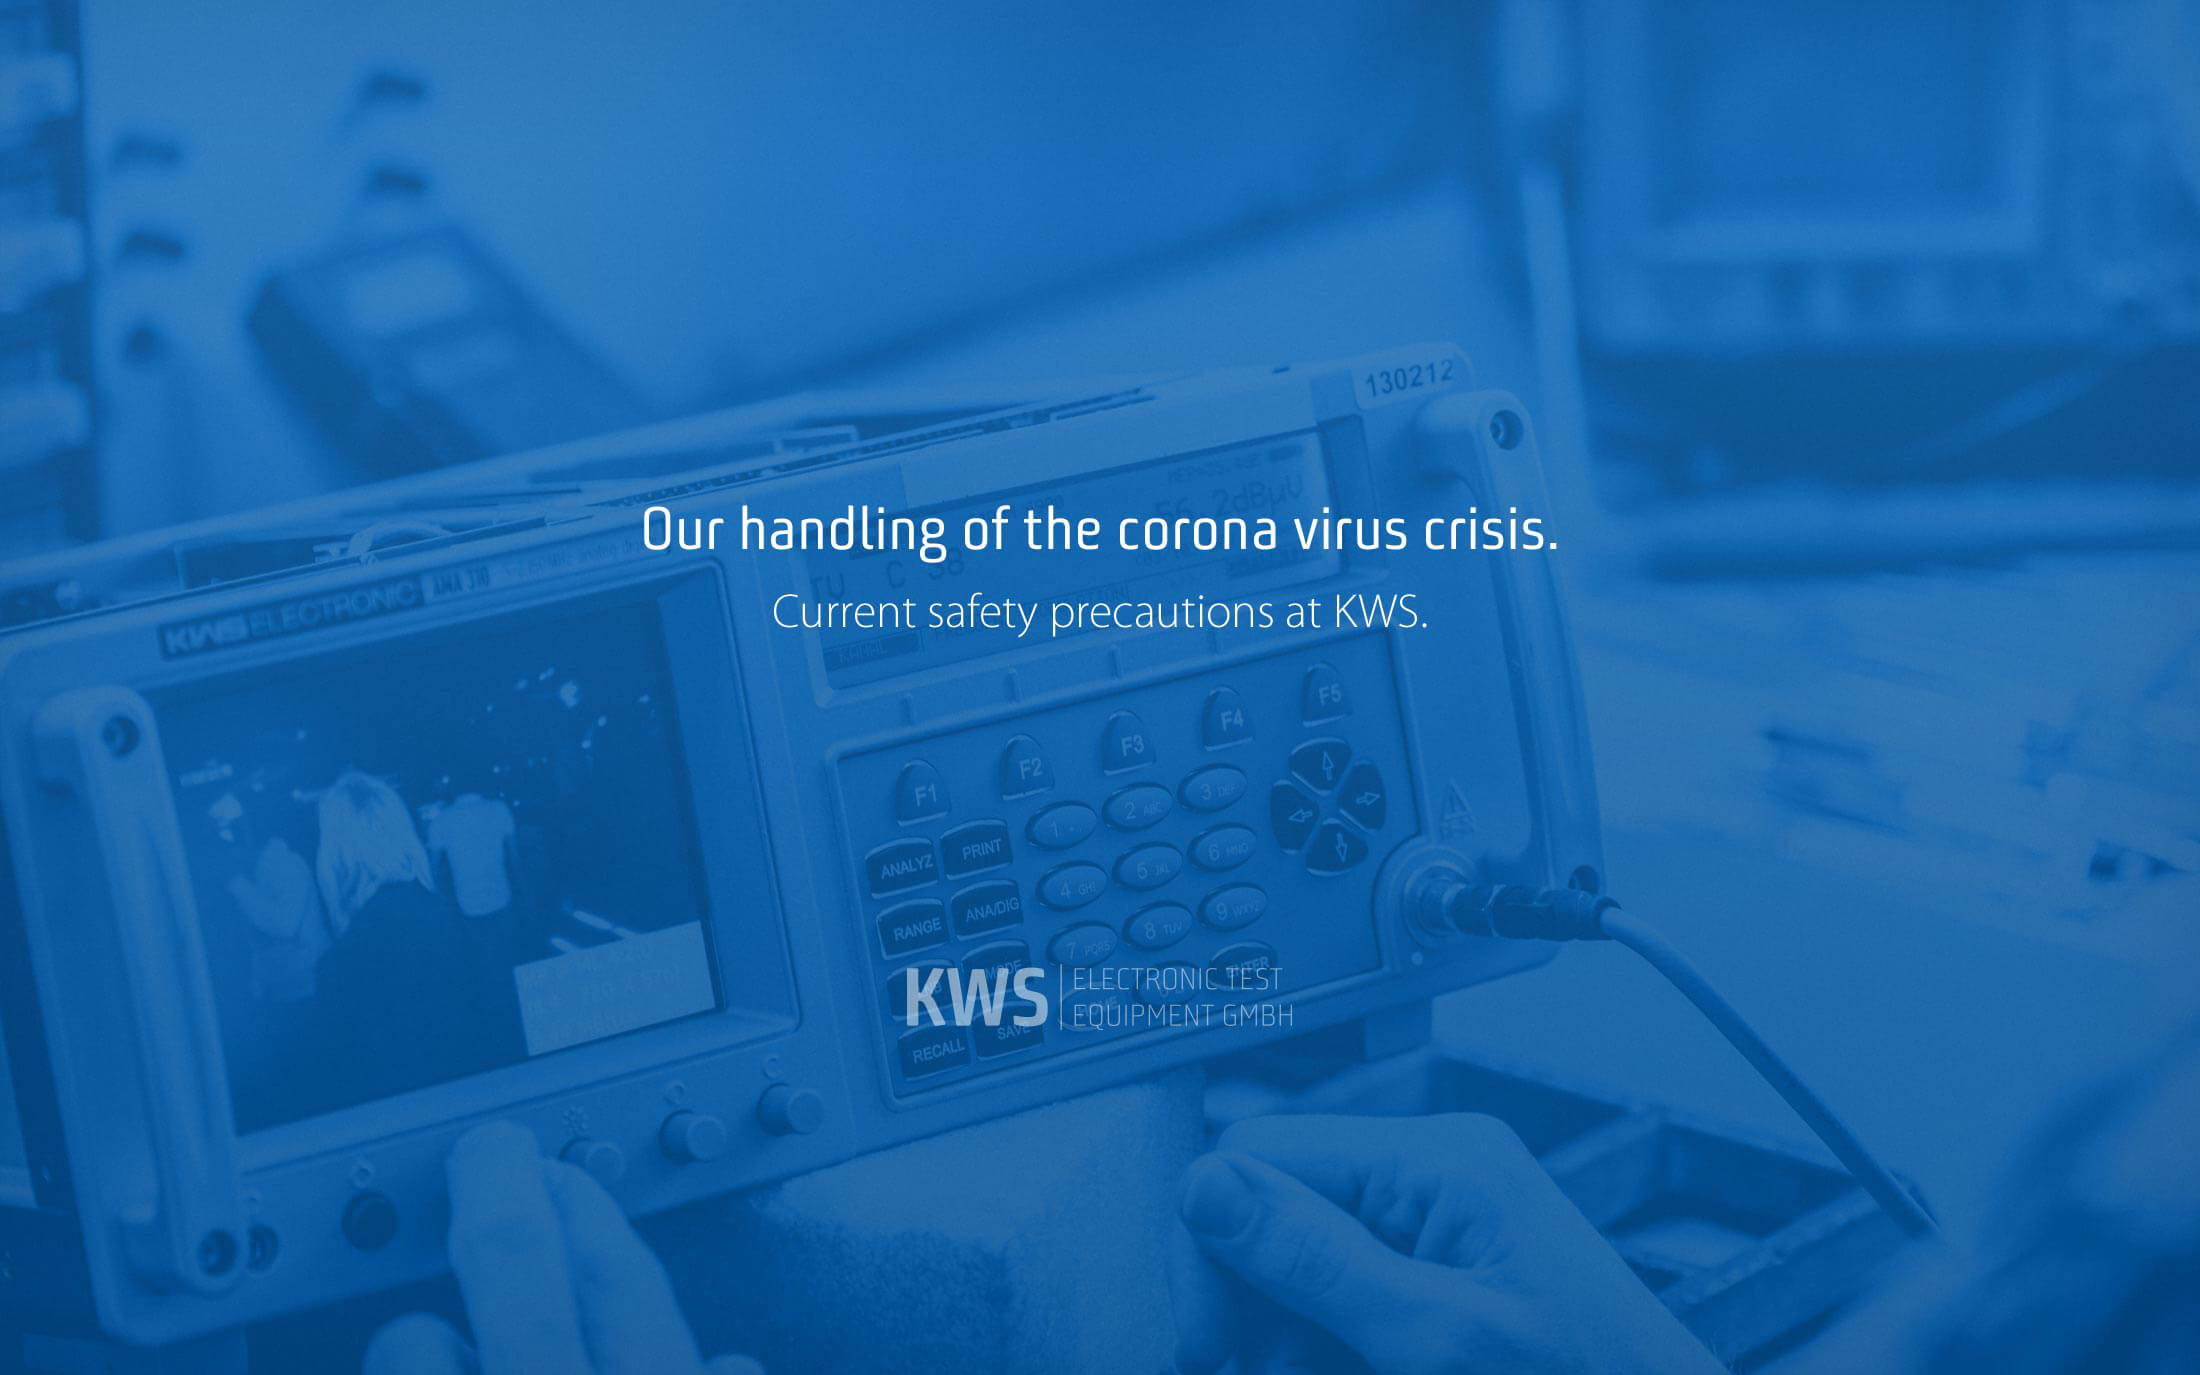 KWS Electronic News 2020: Our habdling of the corona crisis